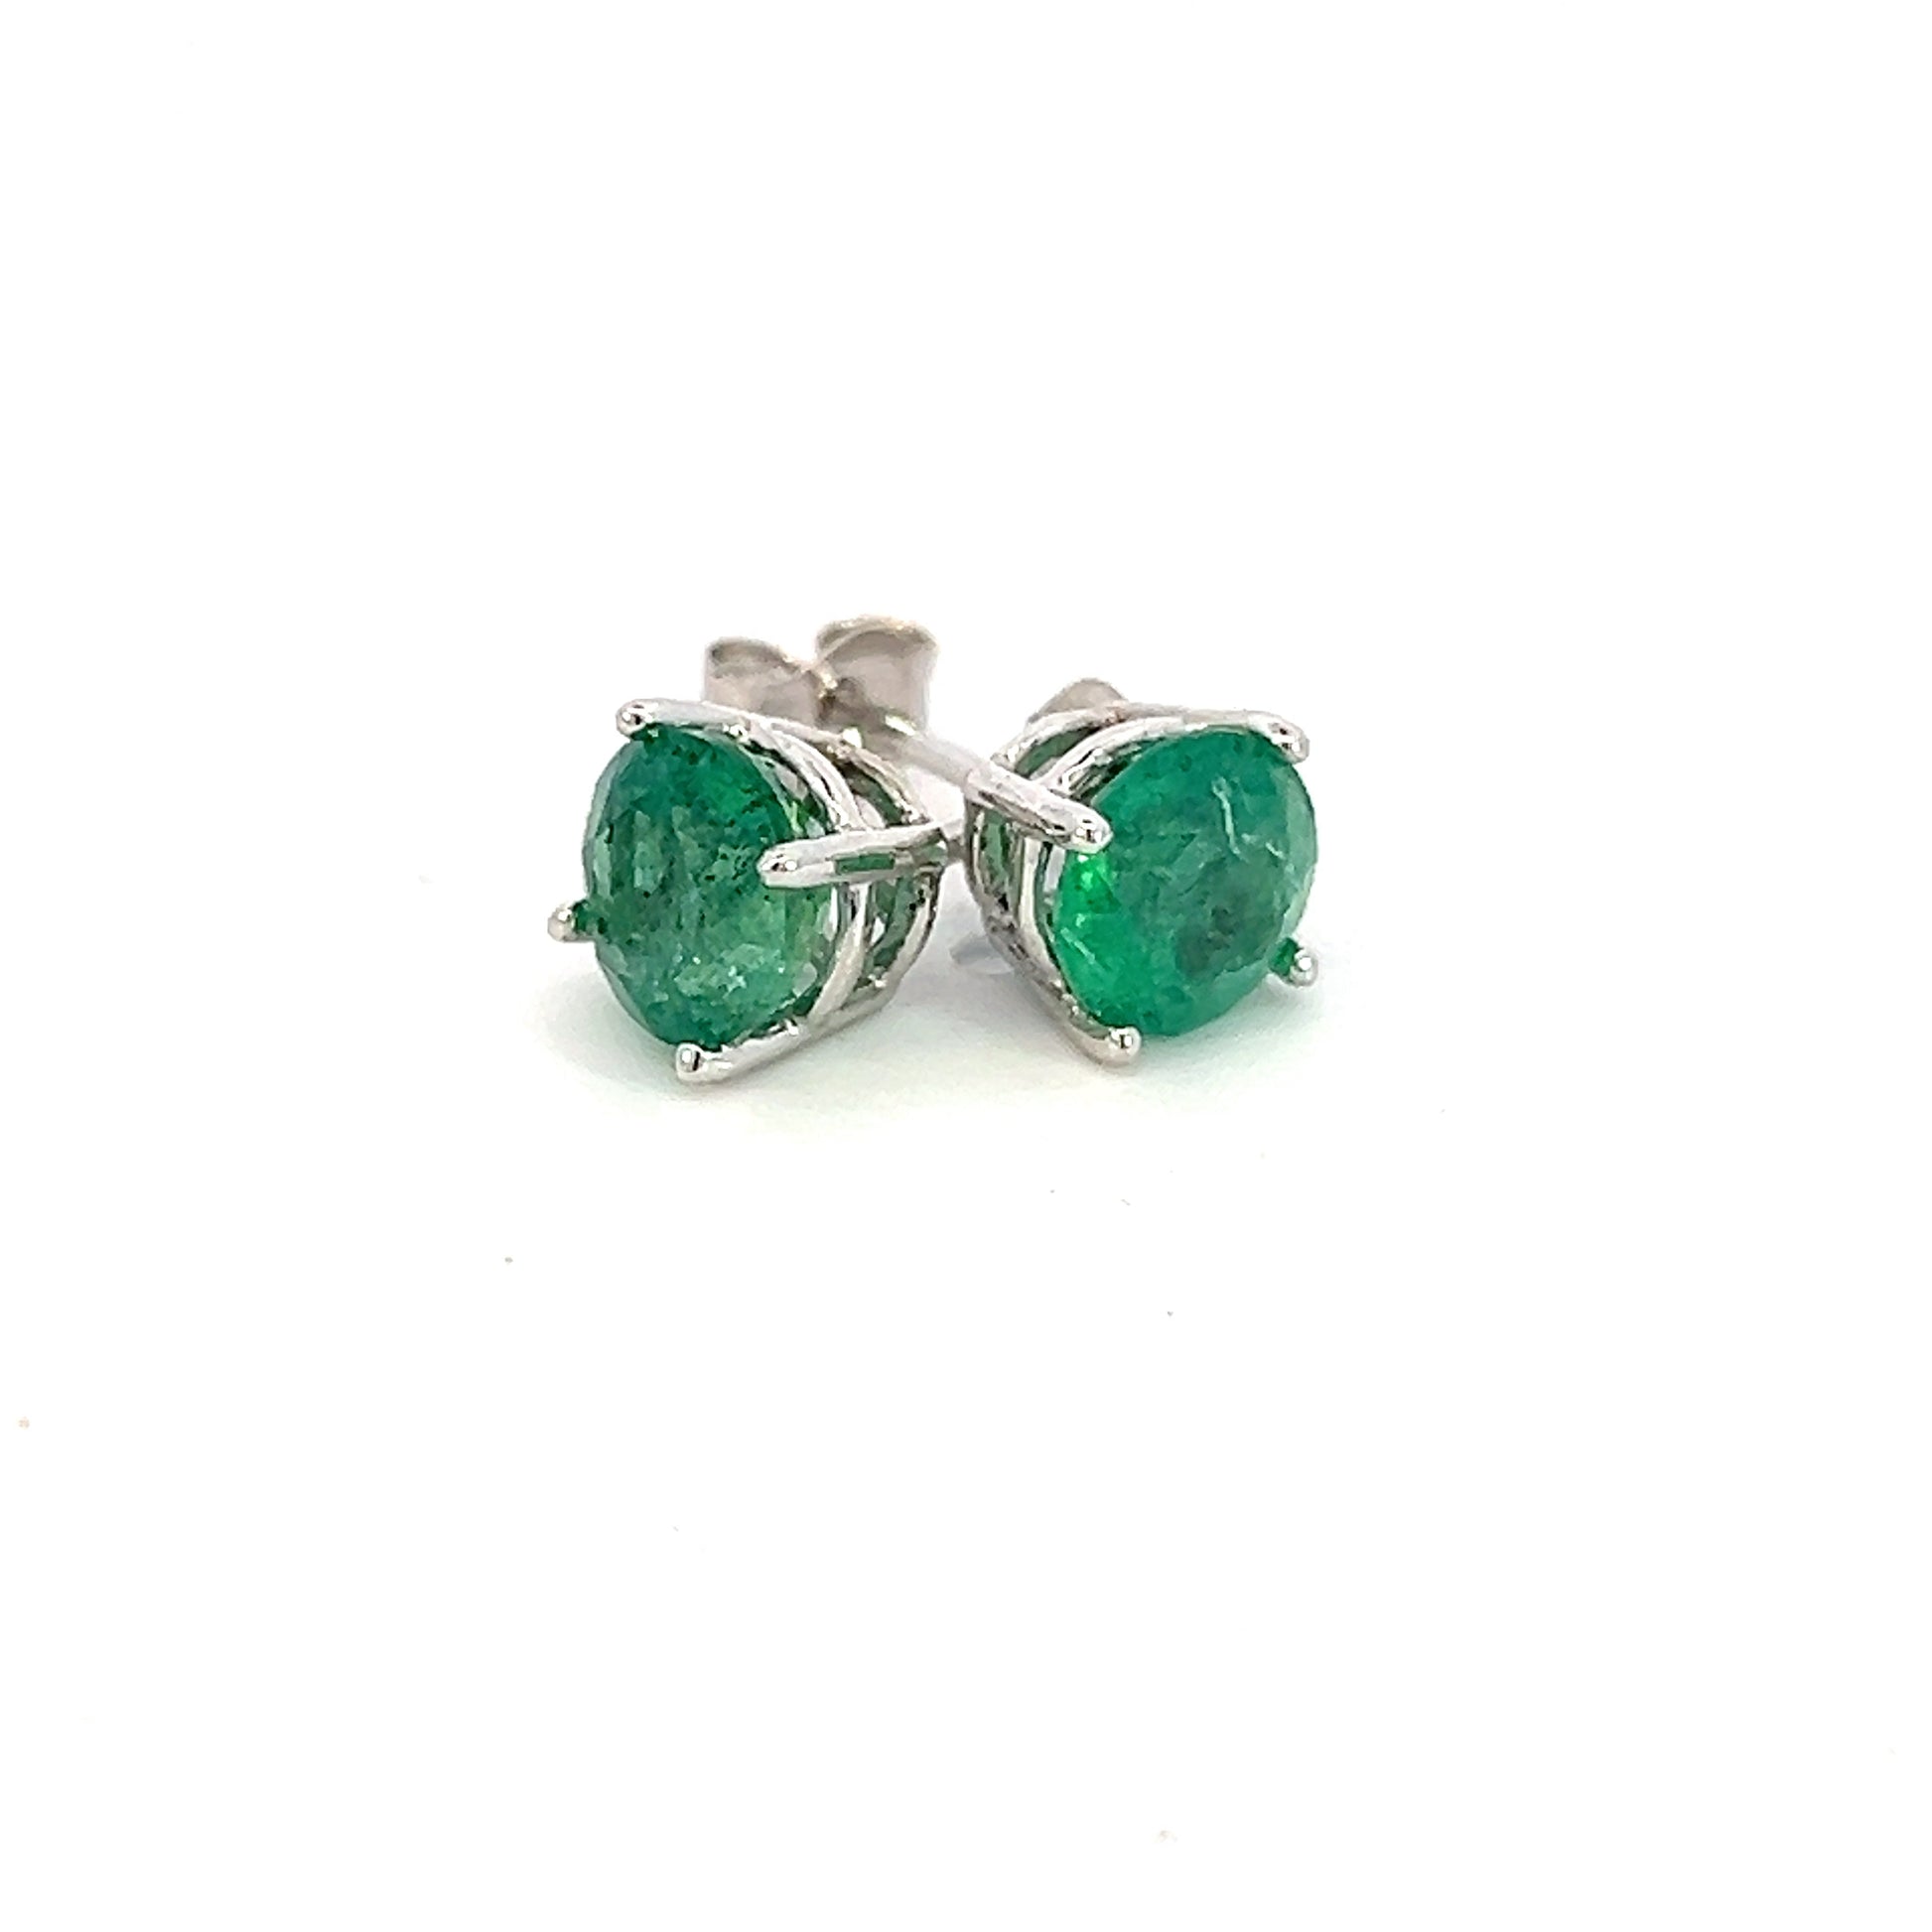 Natural Emerald Earrings 14k White Gold 1.71 TCW Certified $1,950 121156 - Certified Fine Jewelry